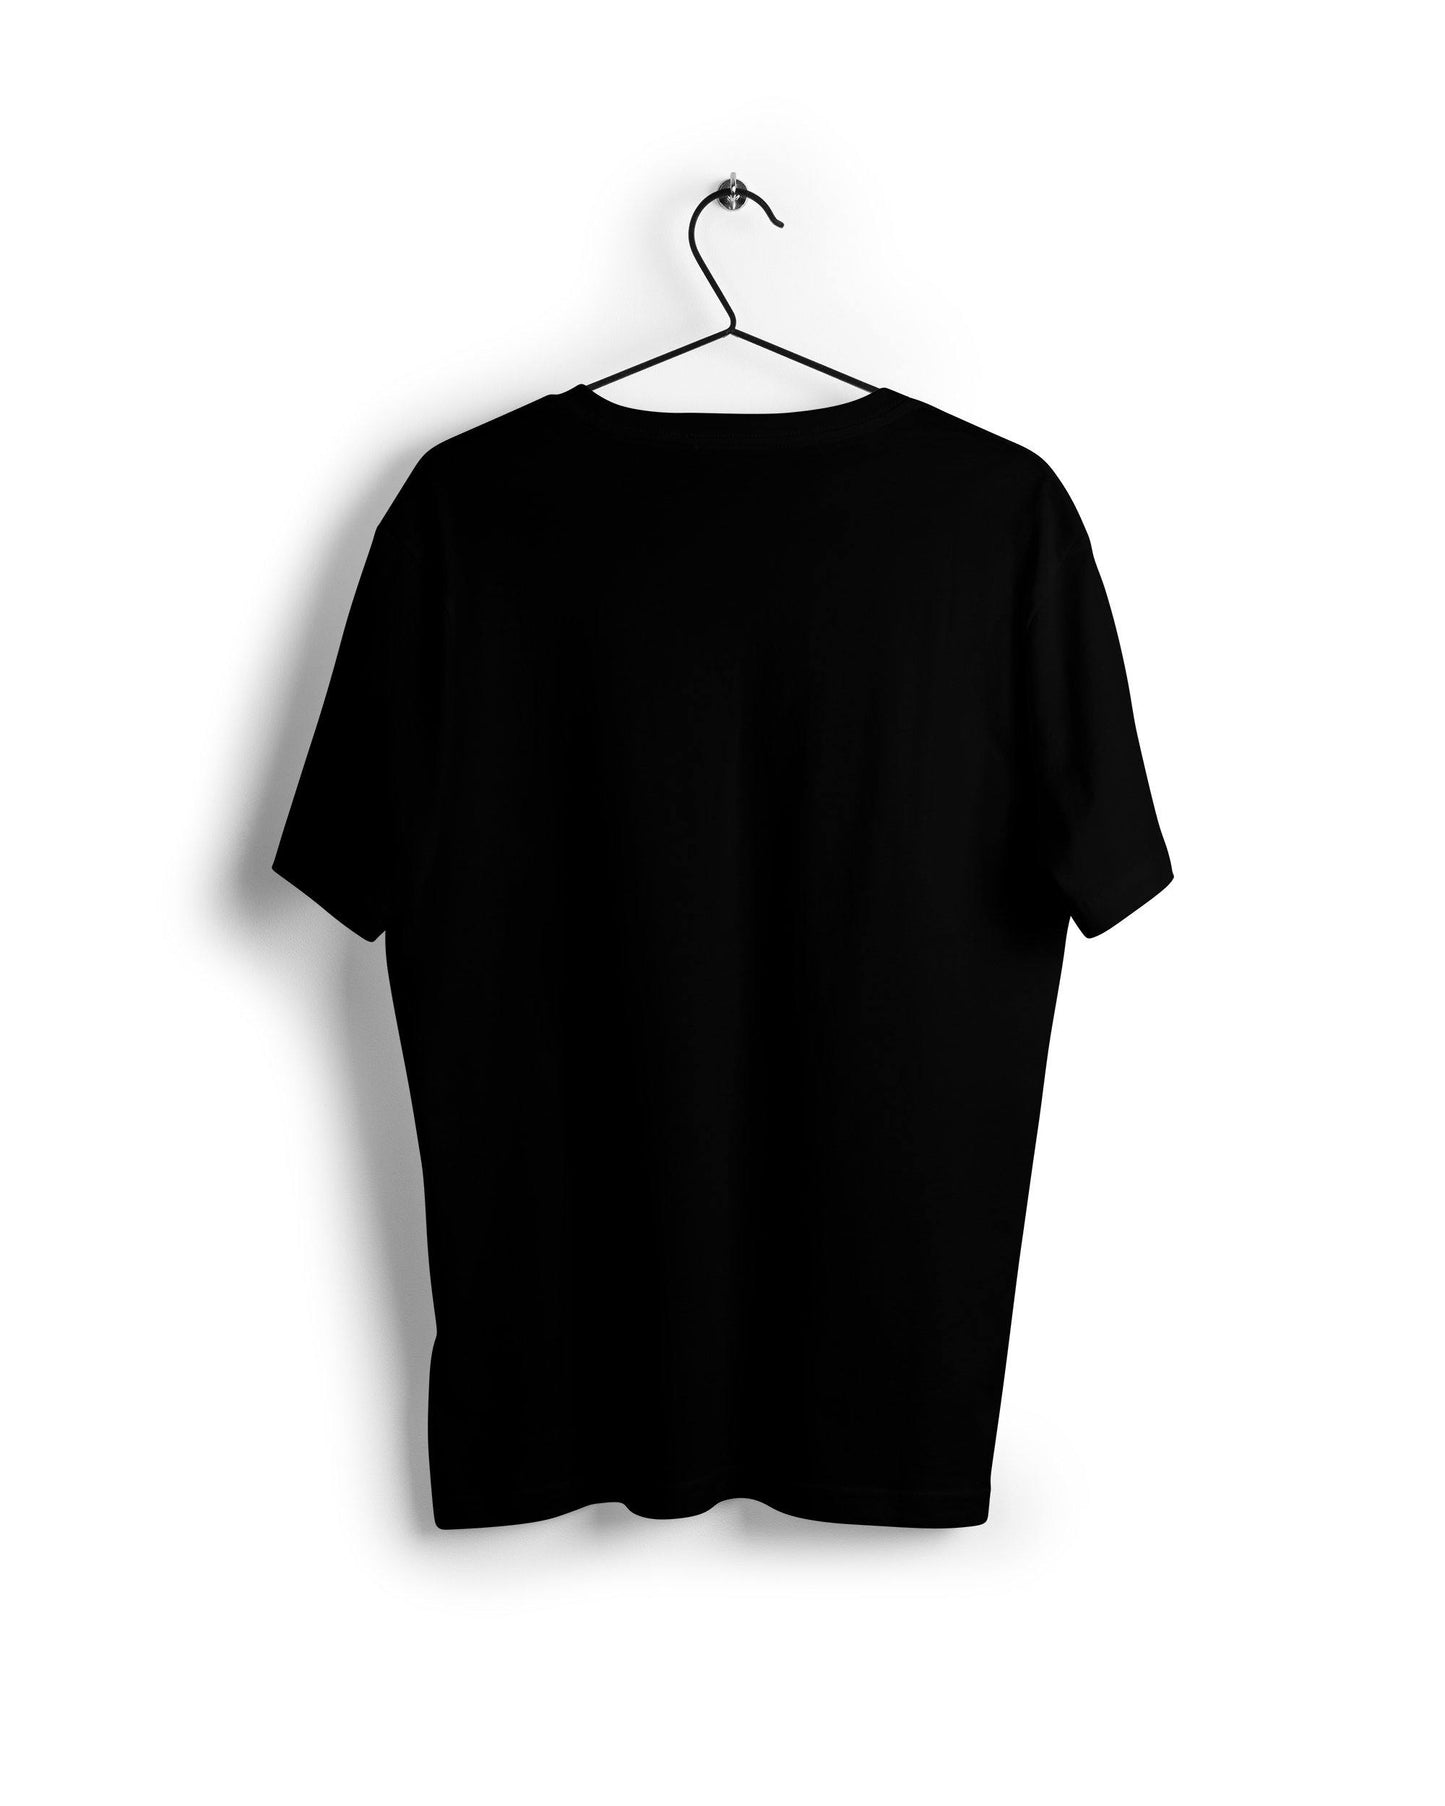 Eddie Murphy Hippo Throwback - Digital Graphics Basic T-shirt Black - Ravin 